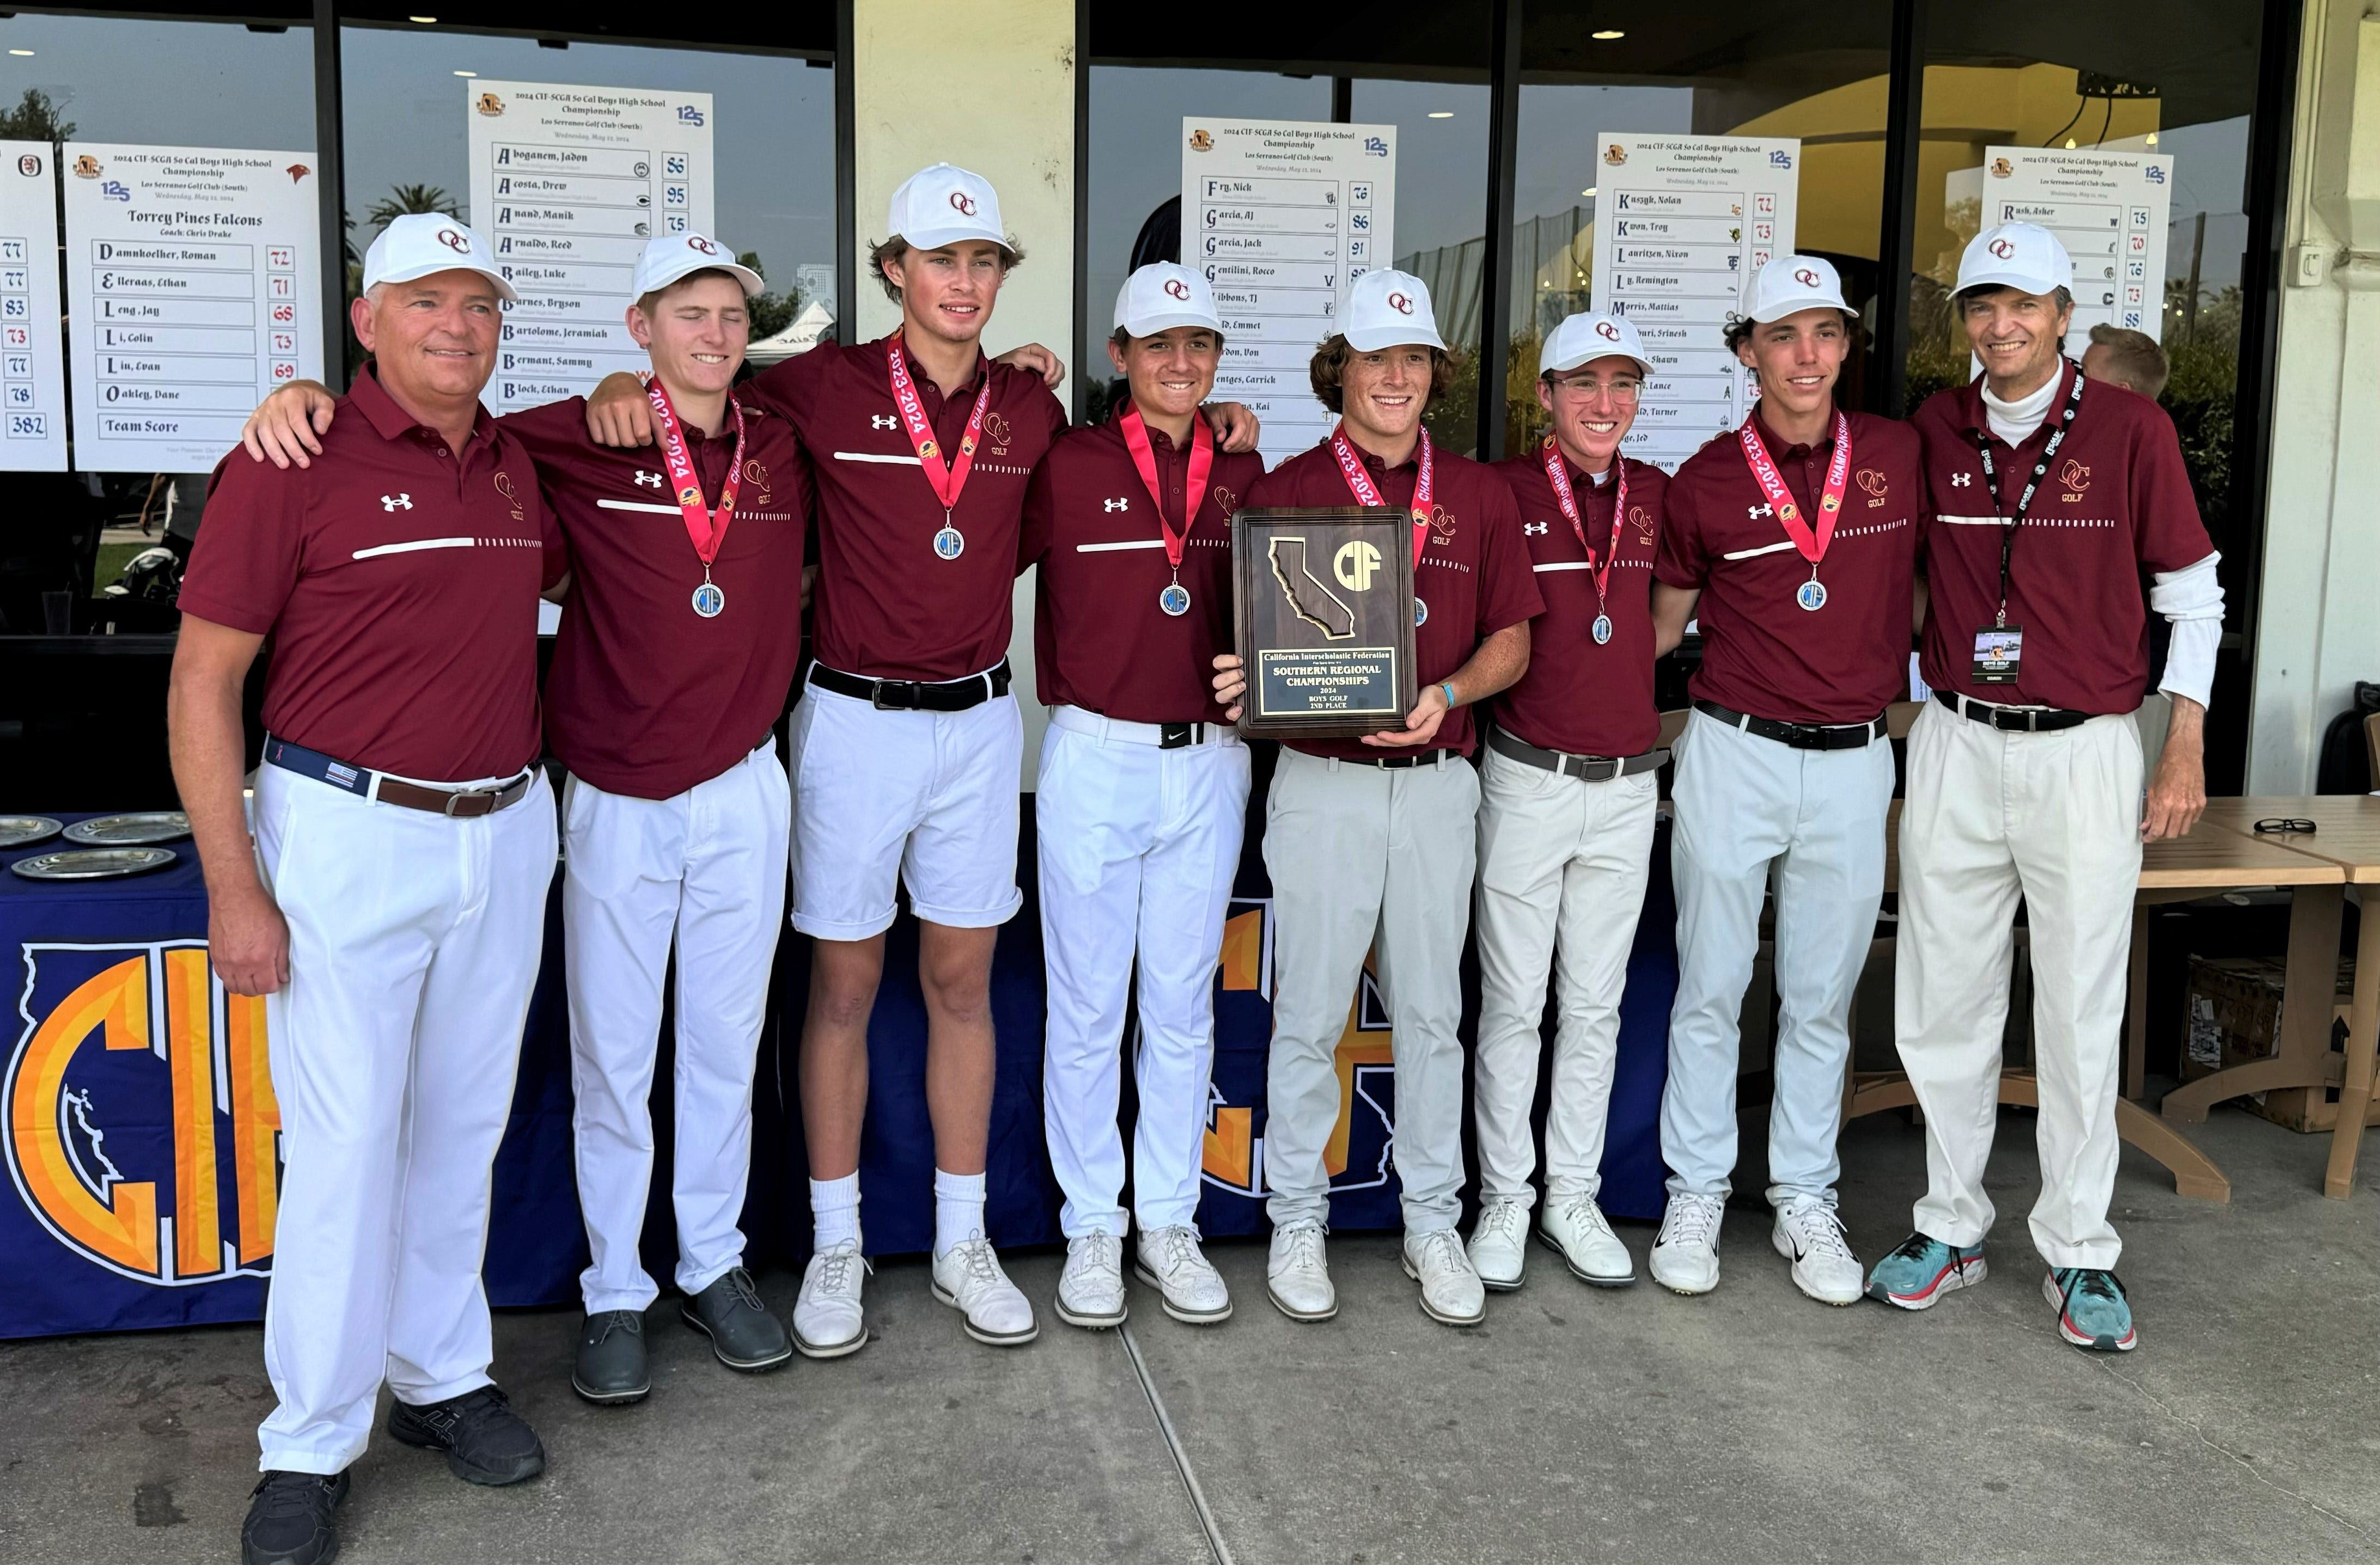 Oaks Christian boys golf team advances to state championship